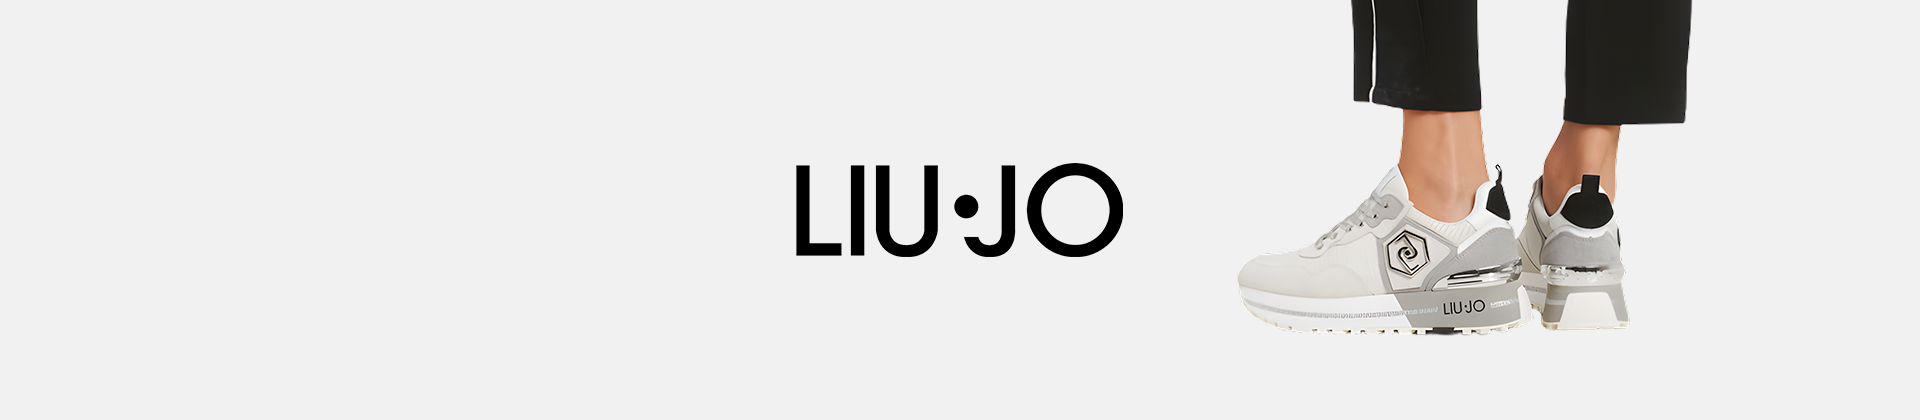 Liu Jo shoes for sale online